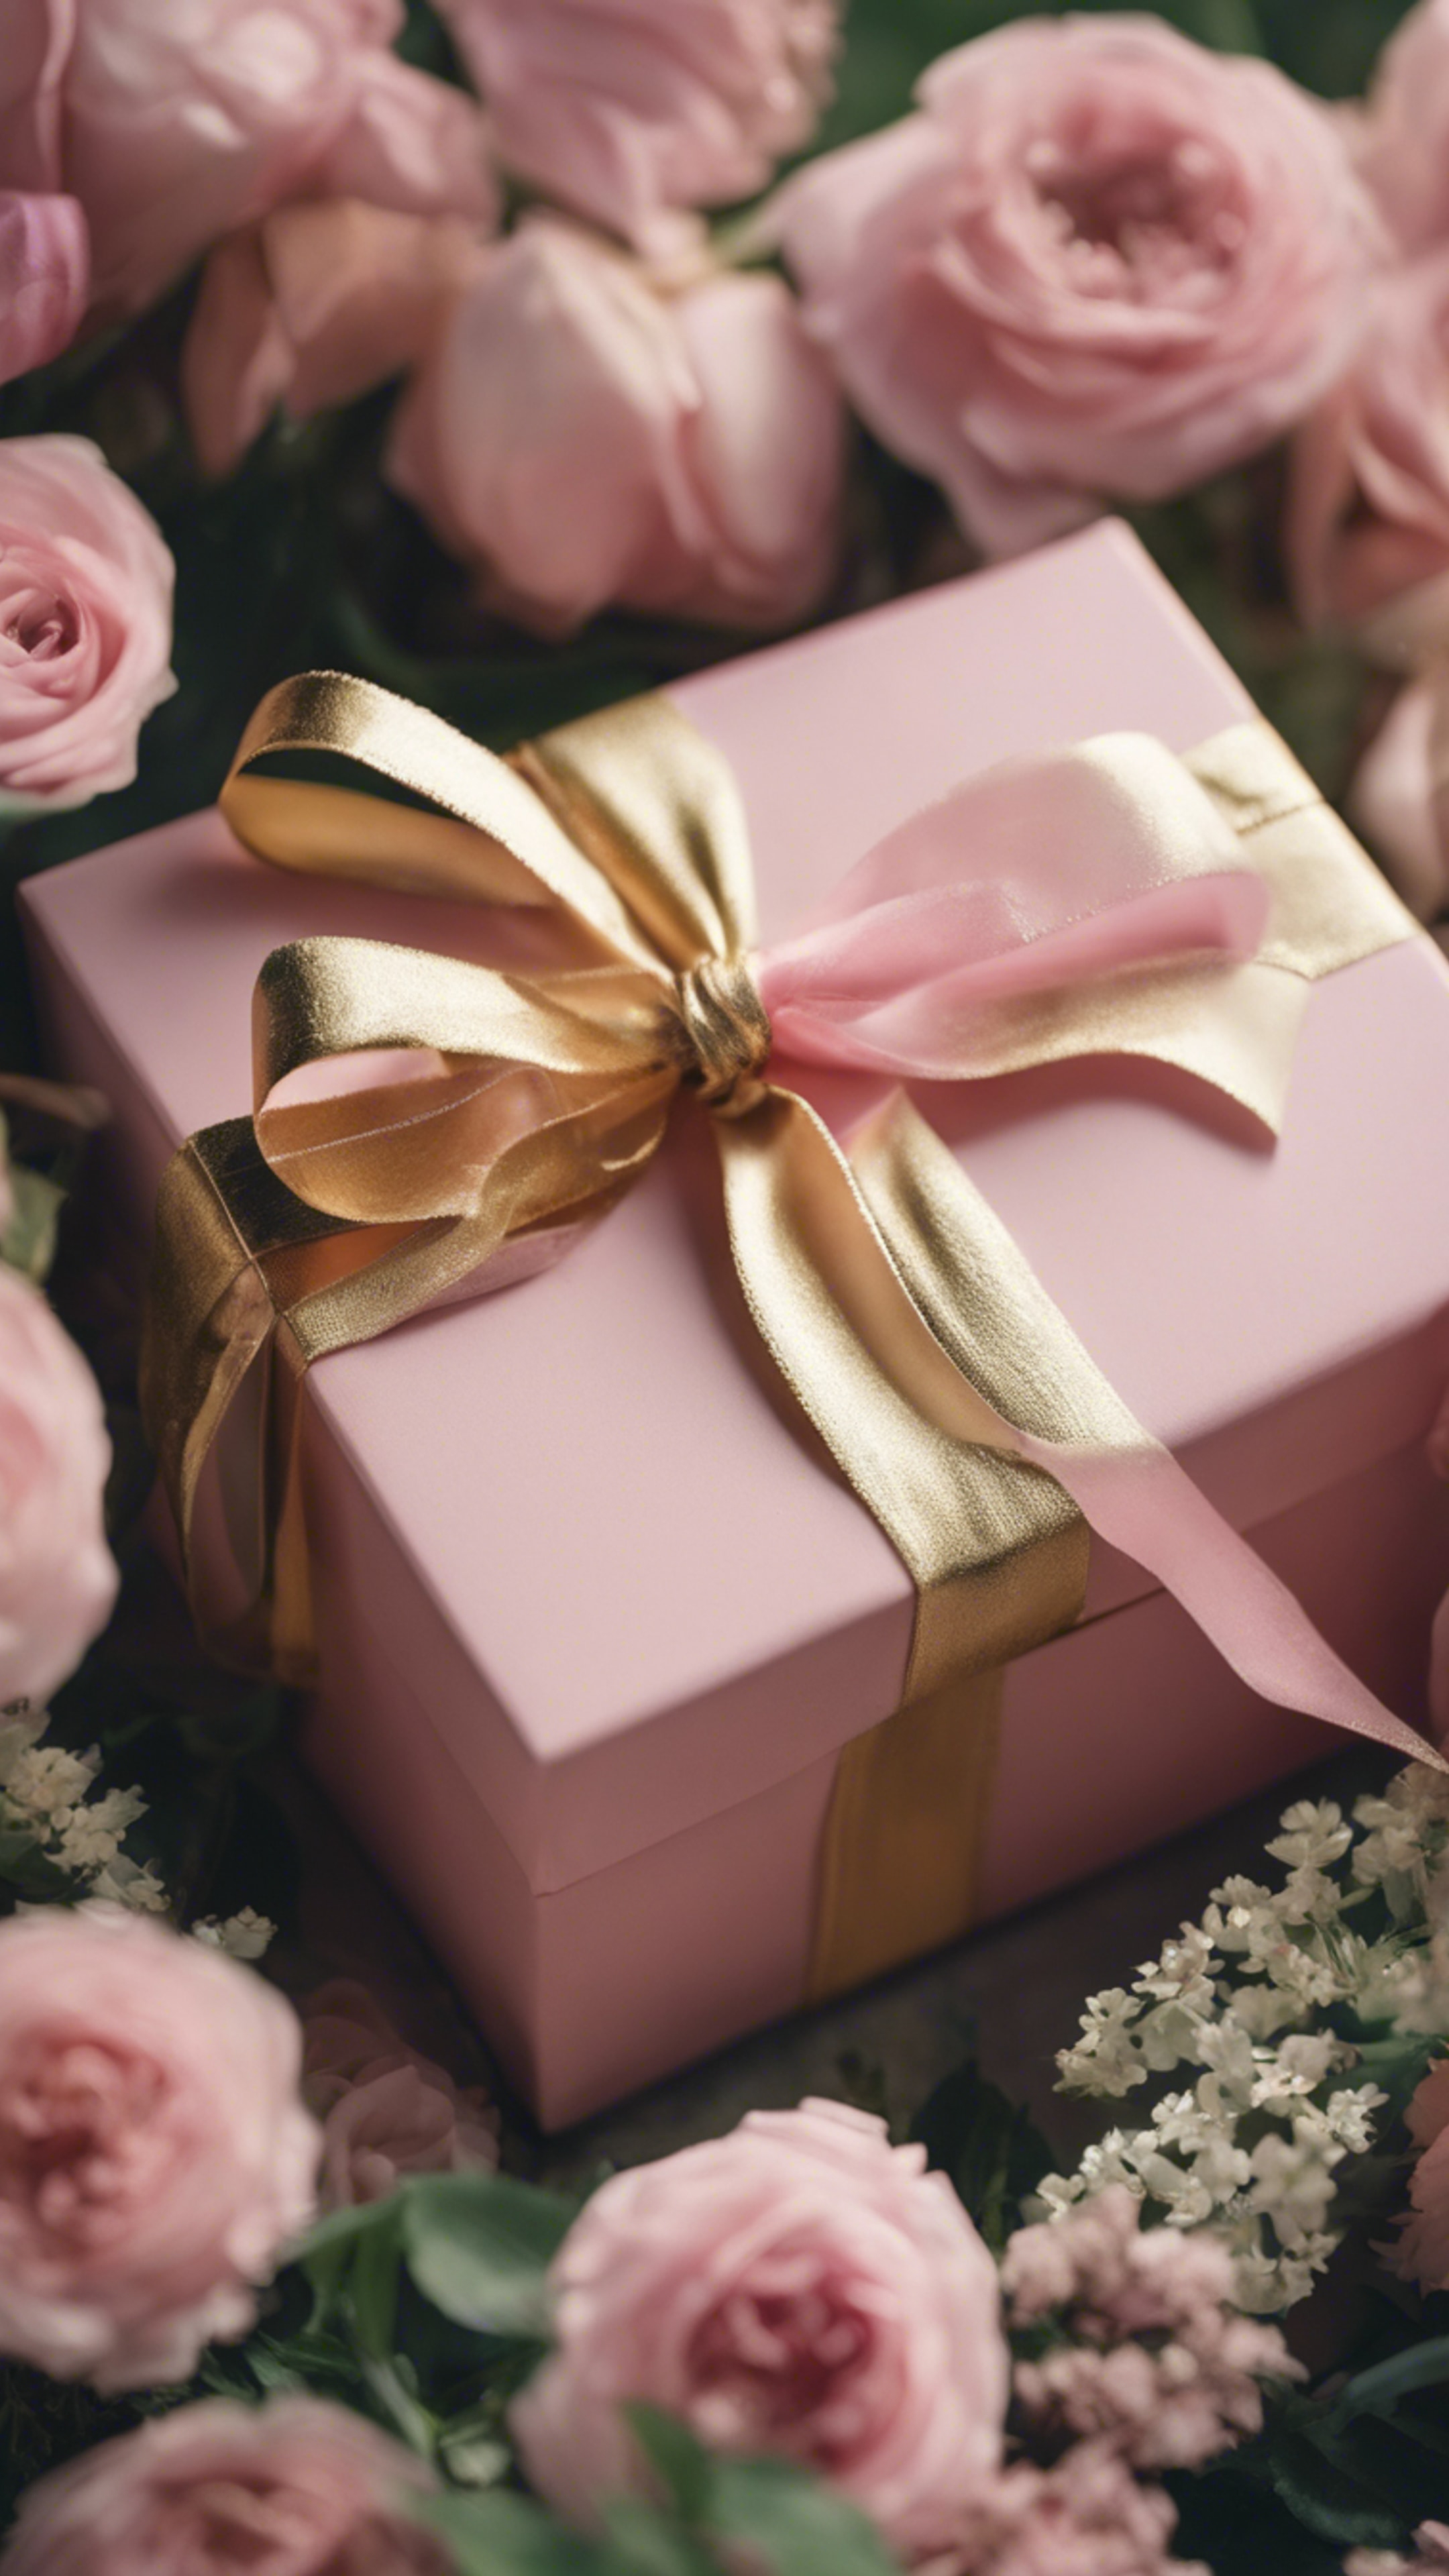 A gold-ribboned pink gift box nestled amongst flowers and greenery. ផ្ទាំង​រូបភាព[057f26c1d4b14d2a96a8]